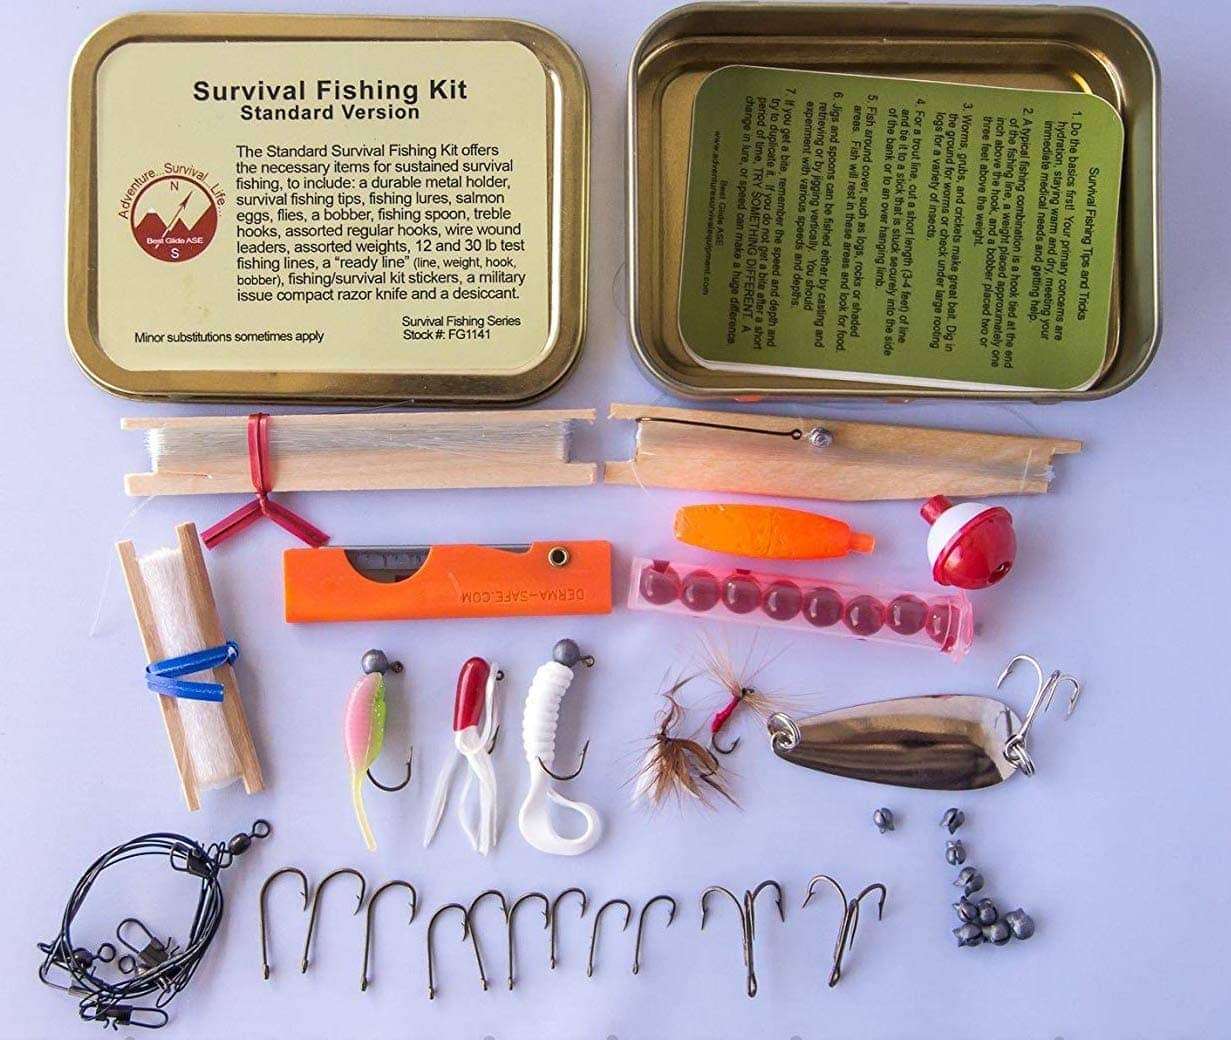 Standard Survival Fishing Kit